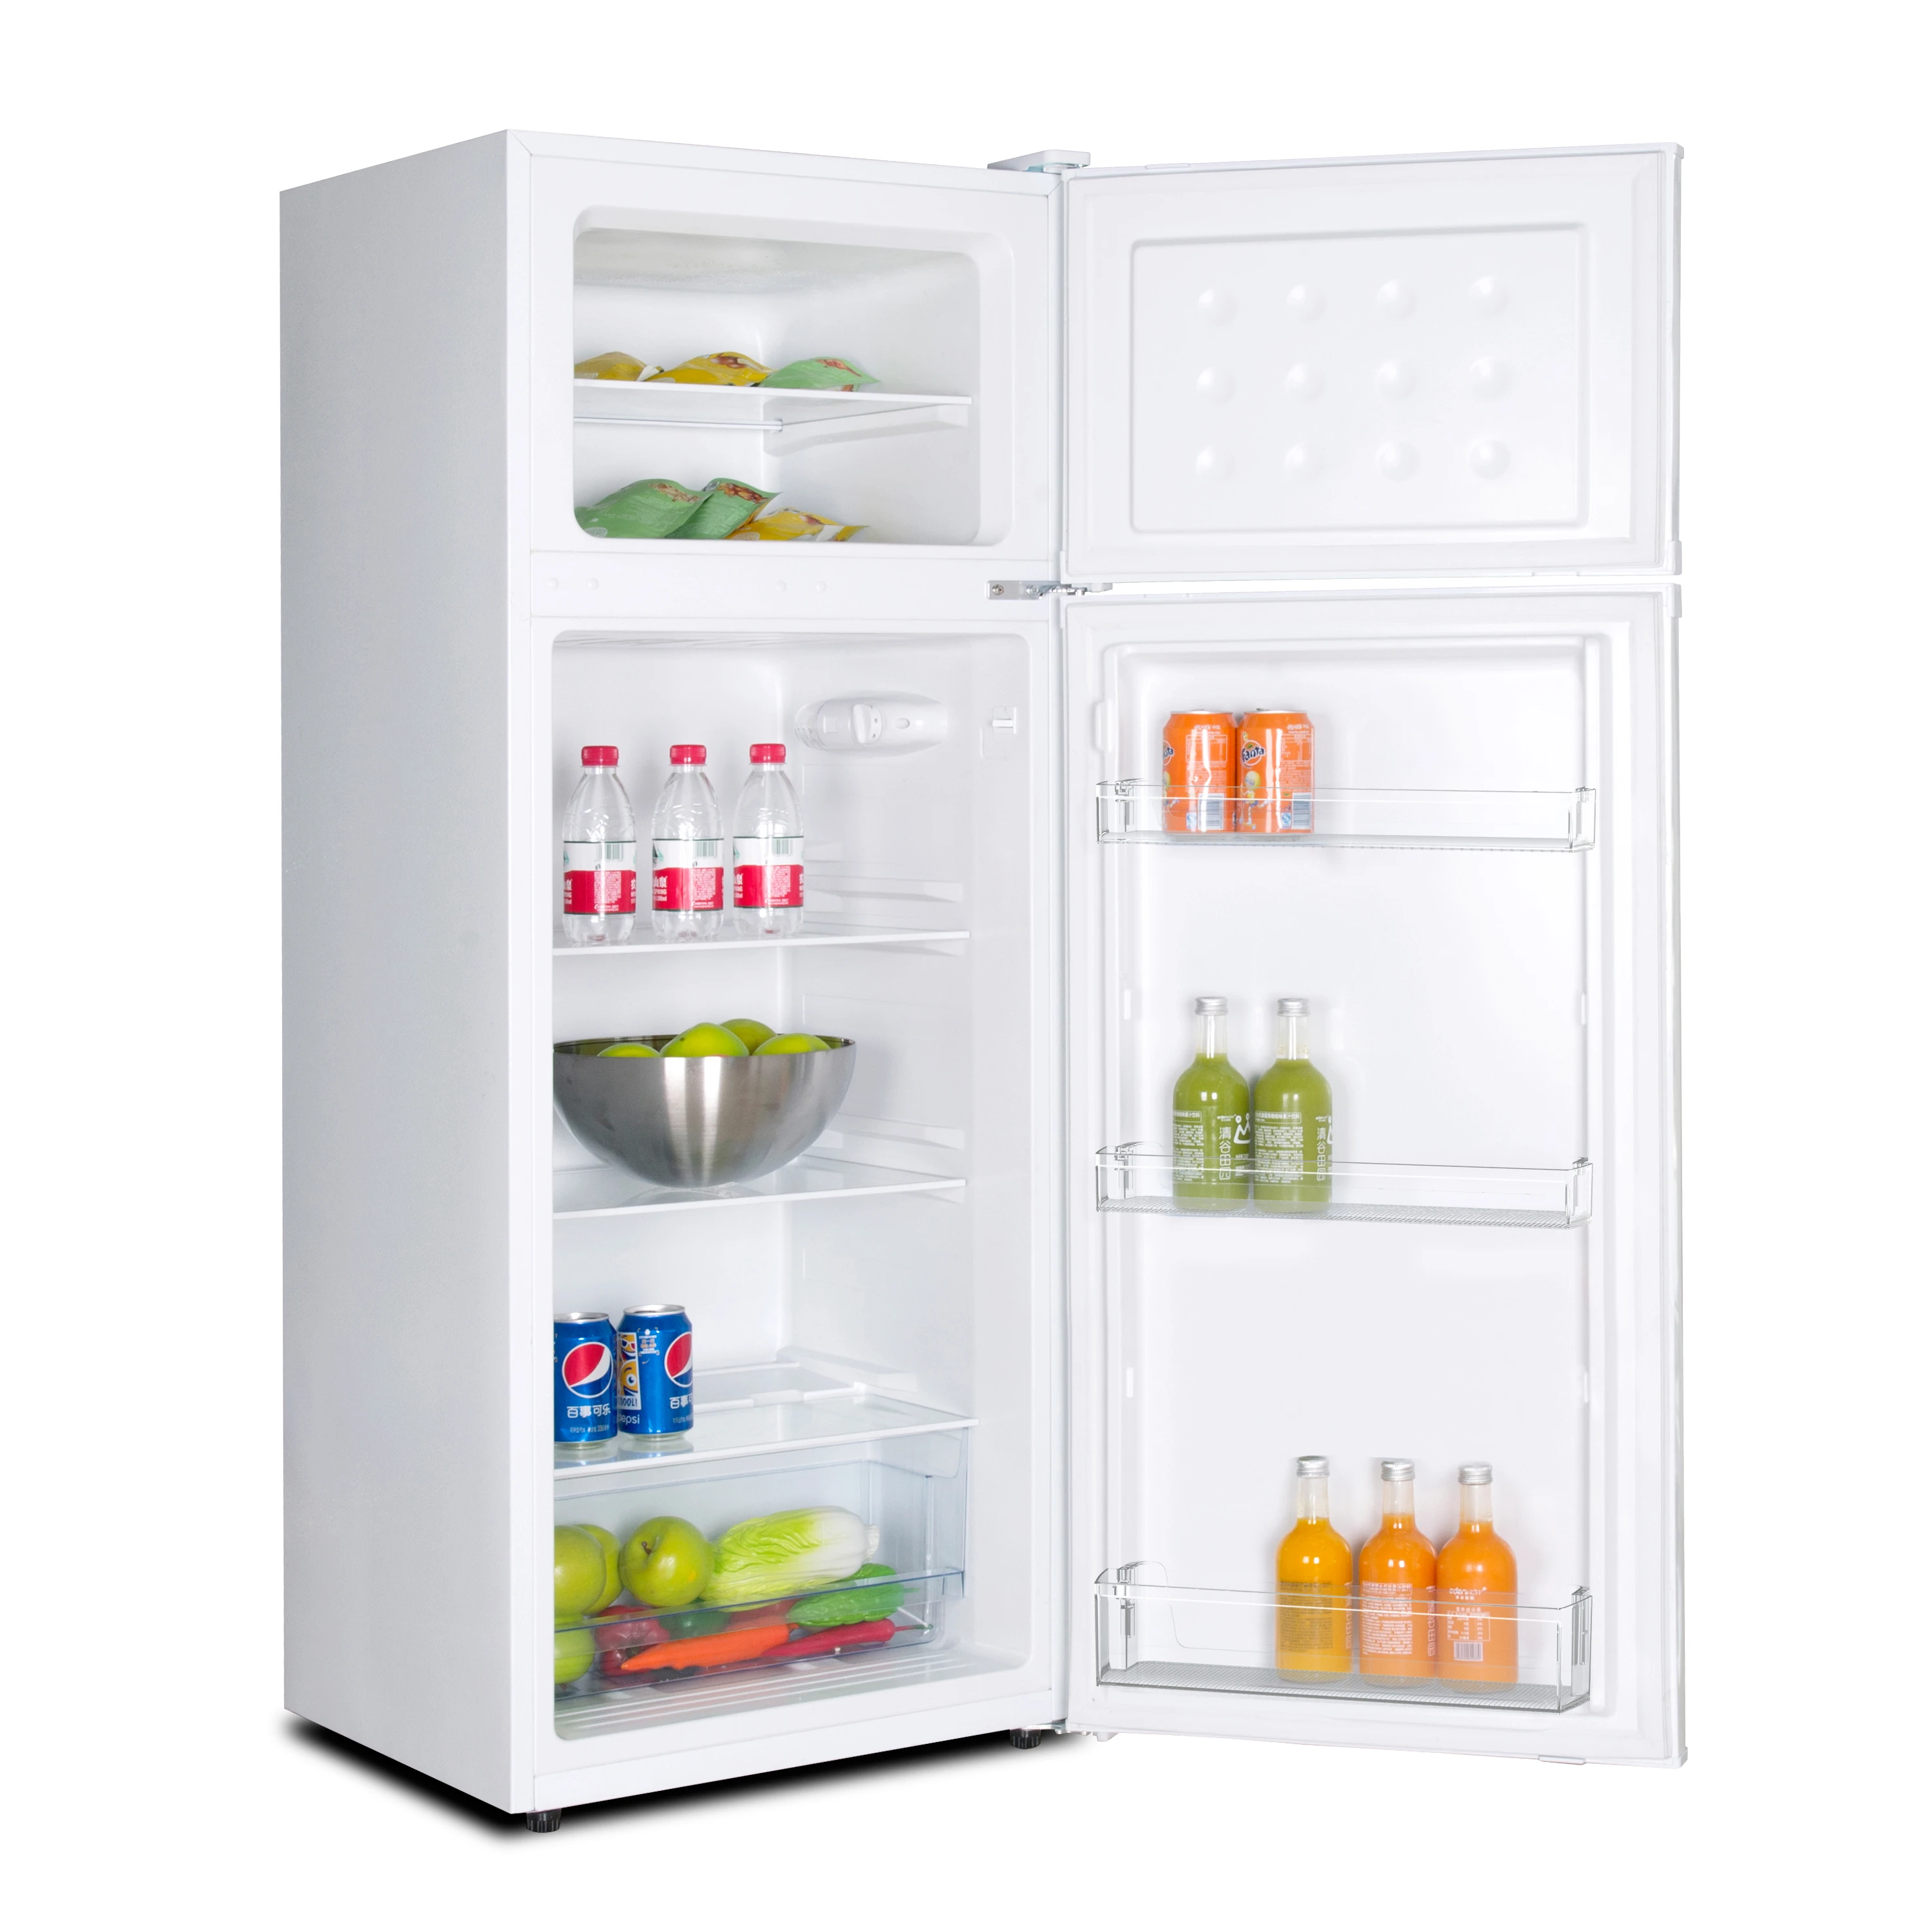 UNIBAR double door fridge refrigerators other refrigerators with large capacity compressor fridge refrigerator on sale(USCF-210)